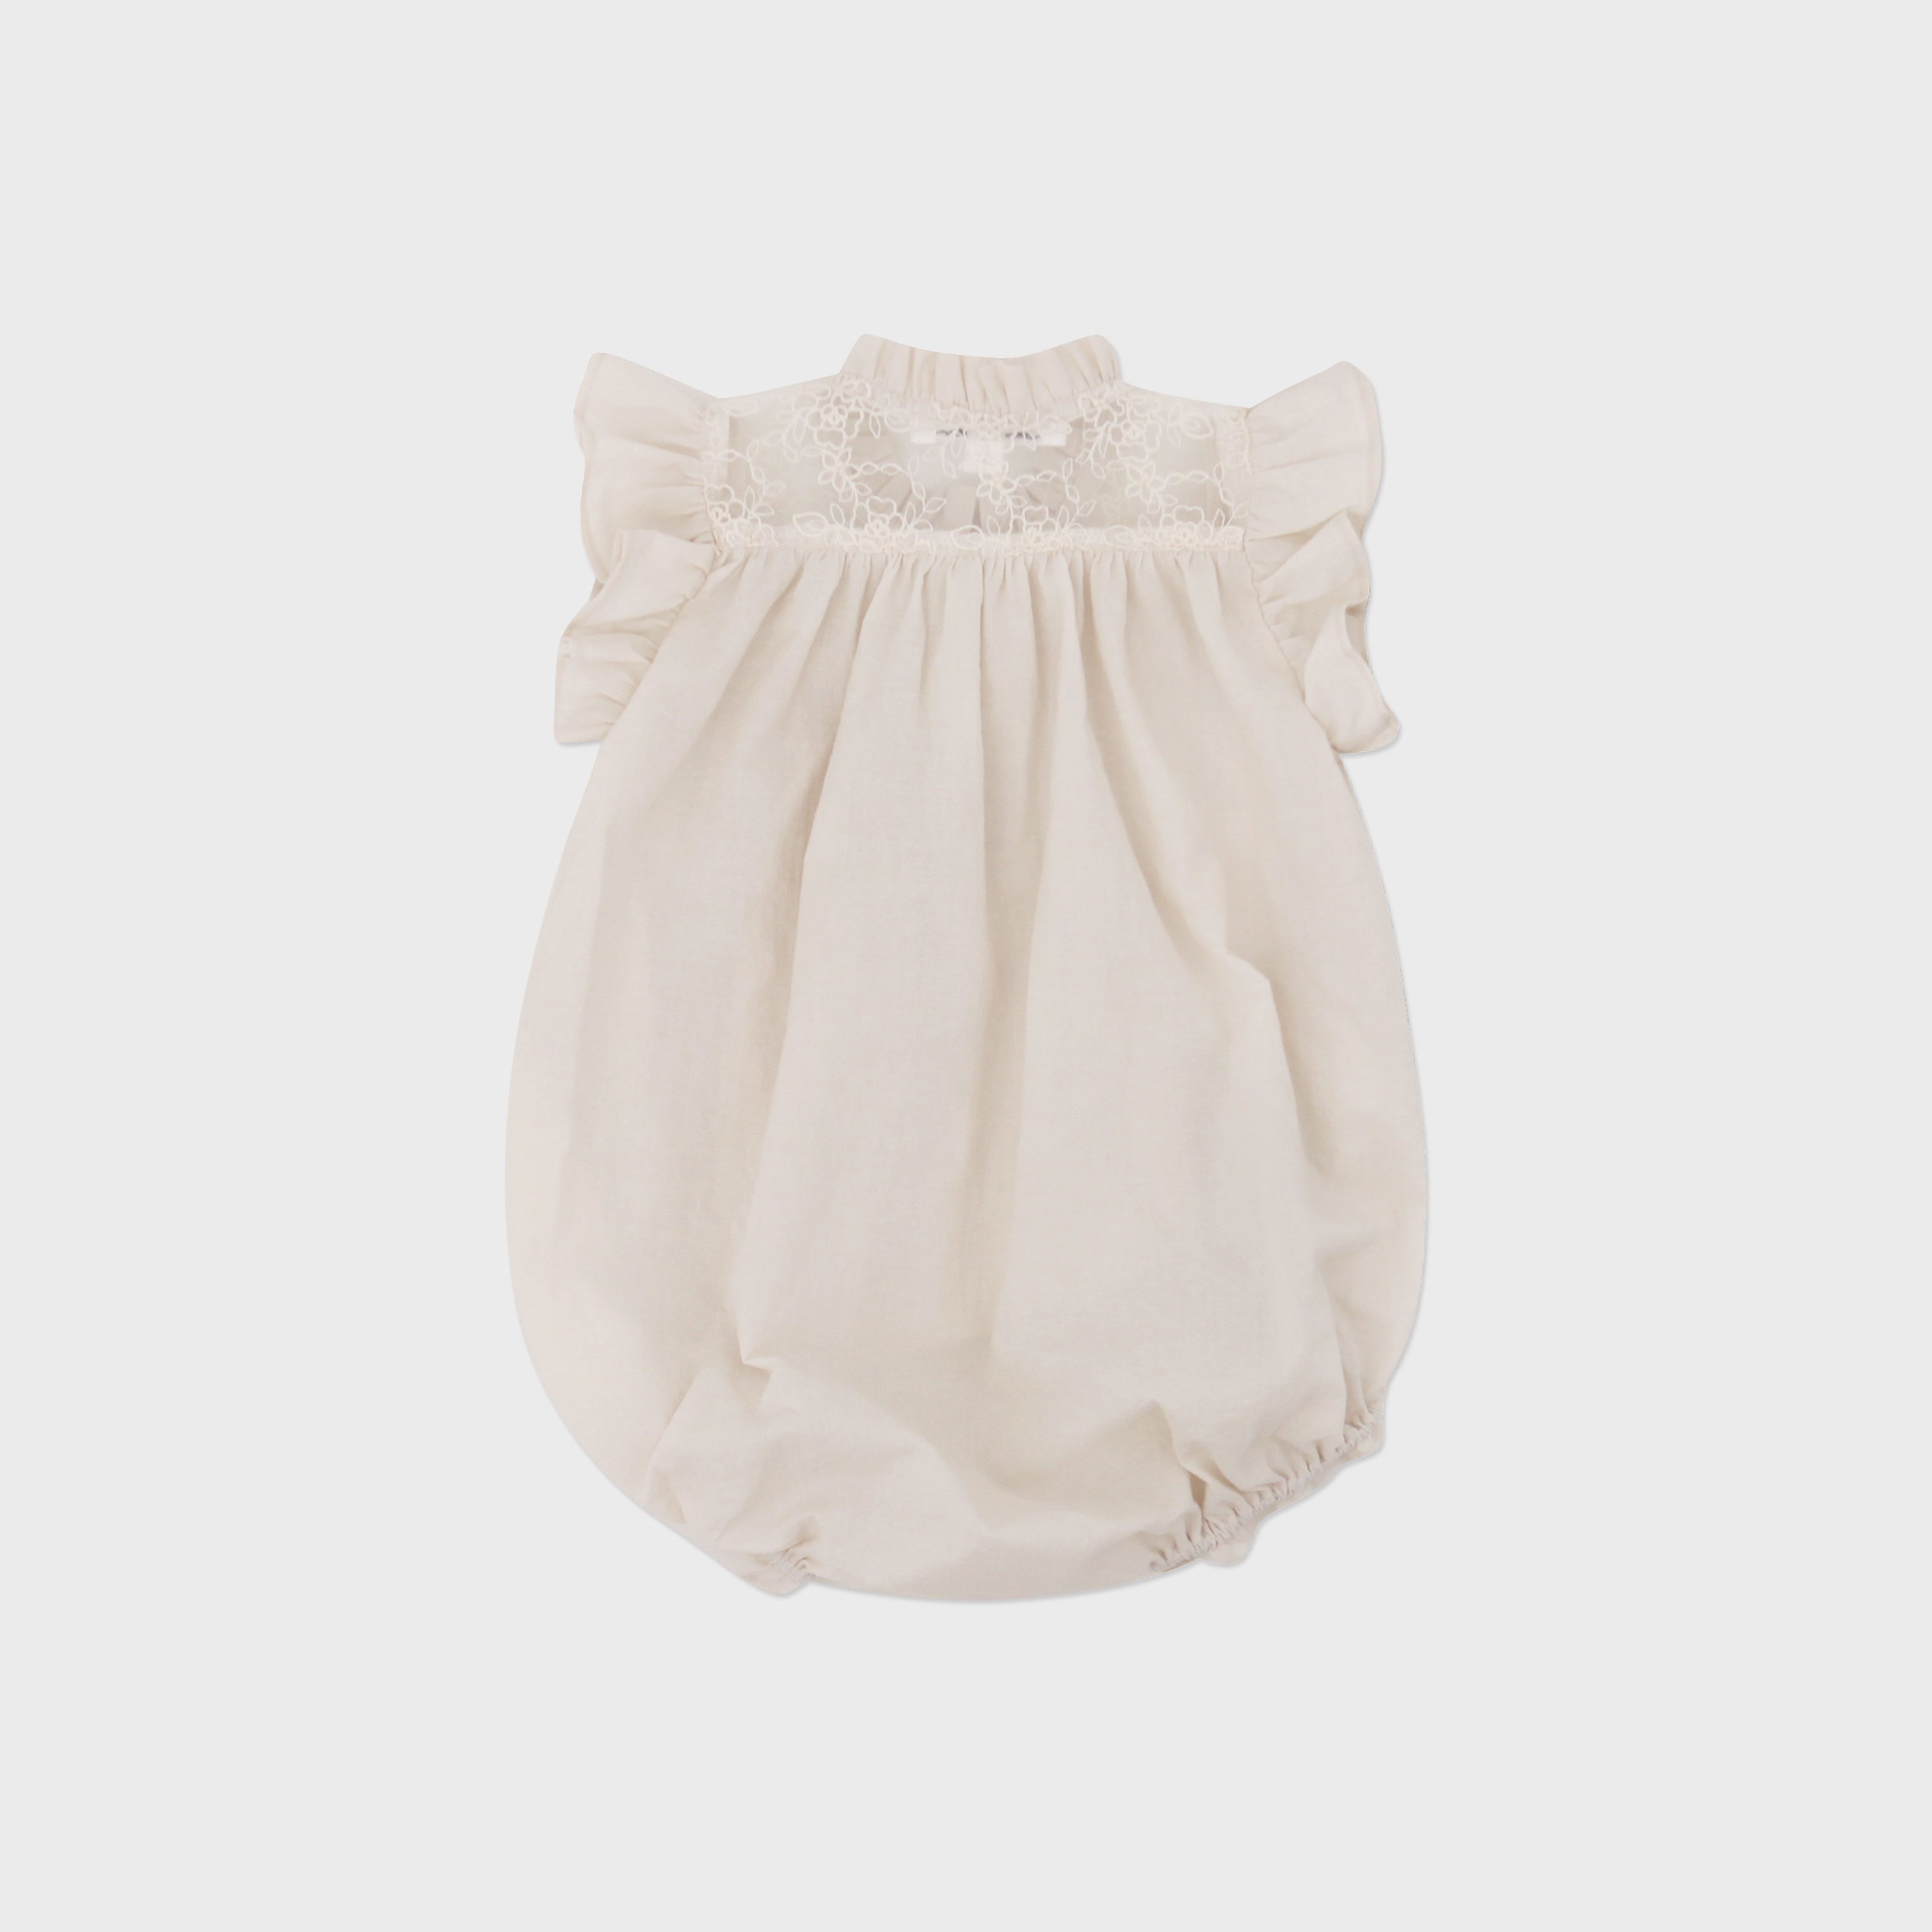 Baby Girls Beige Lace Cotton Babysuit